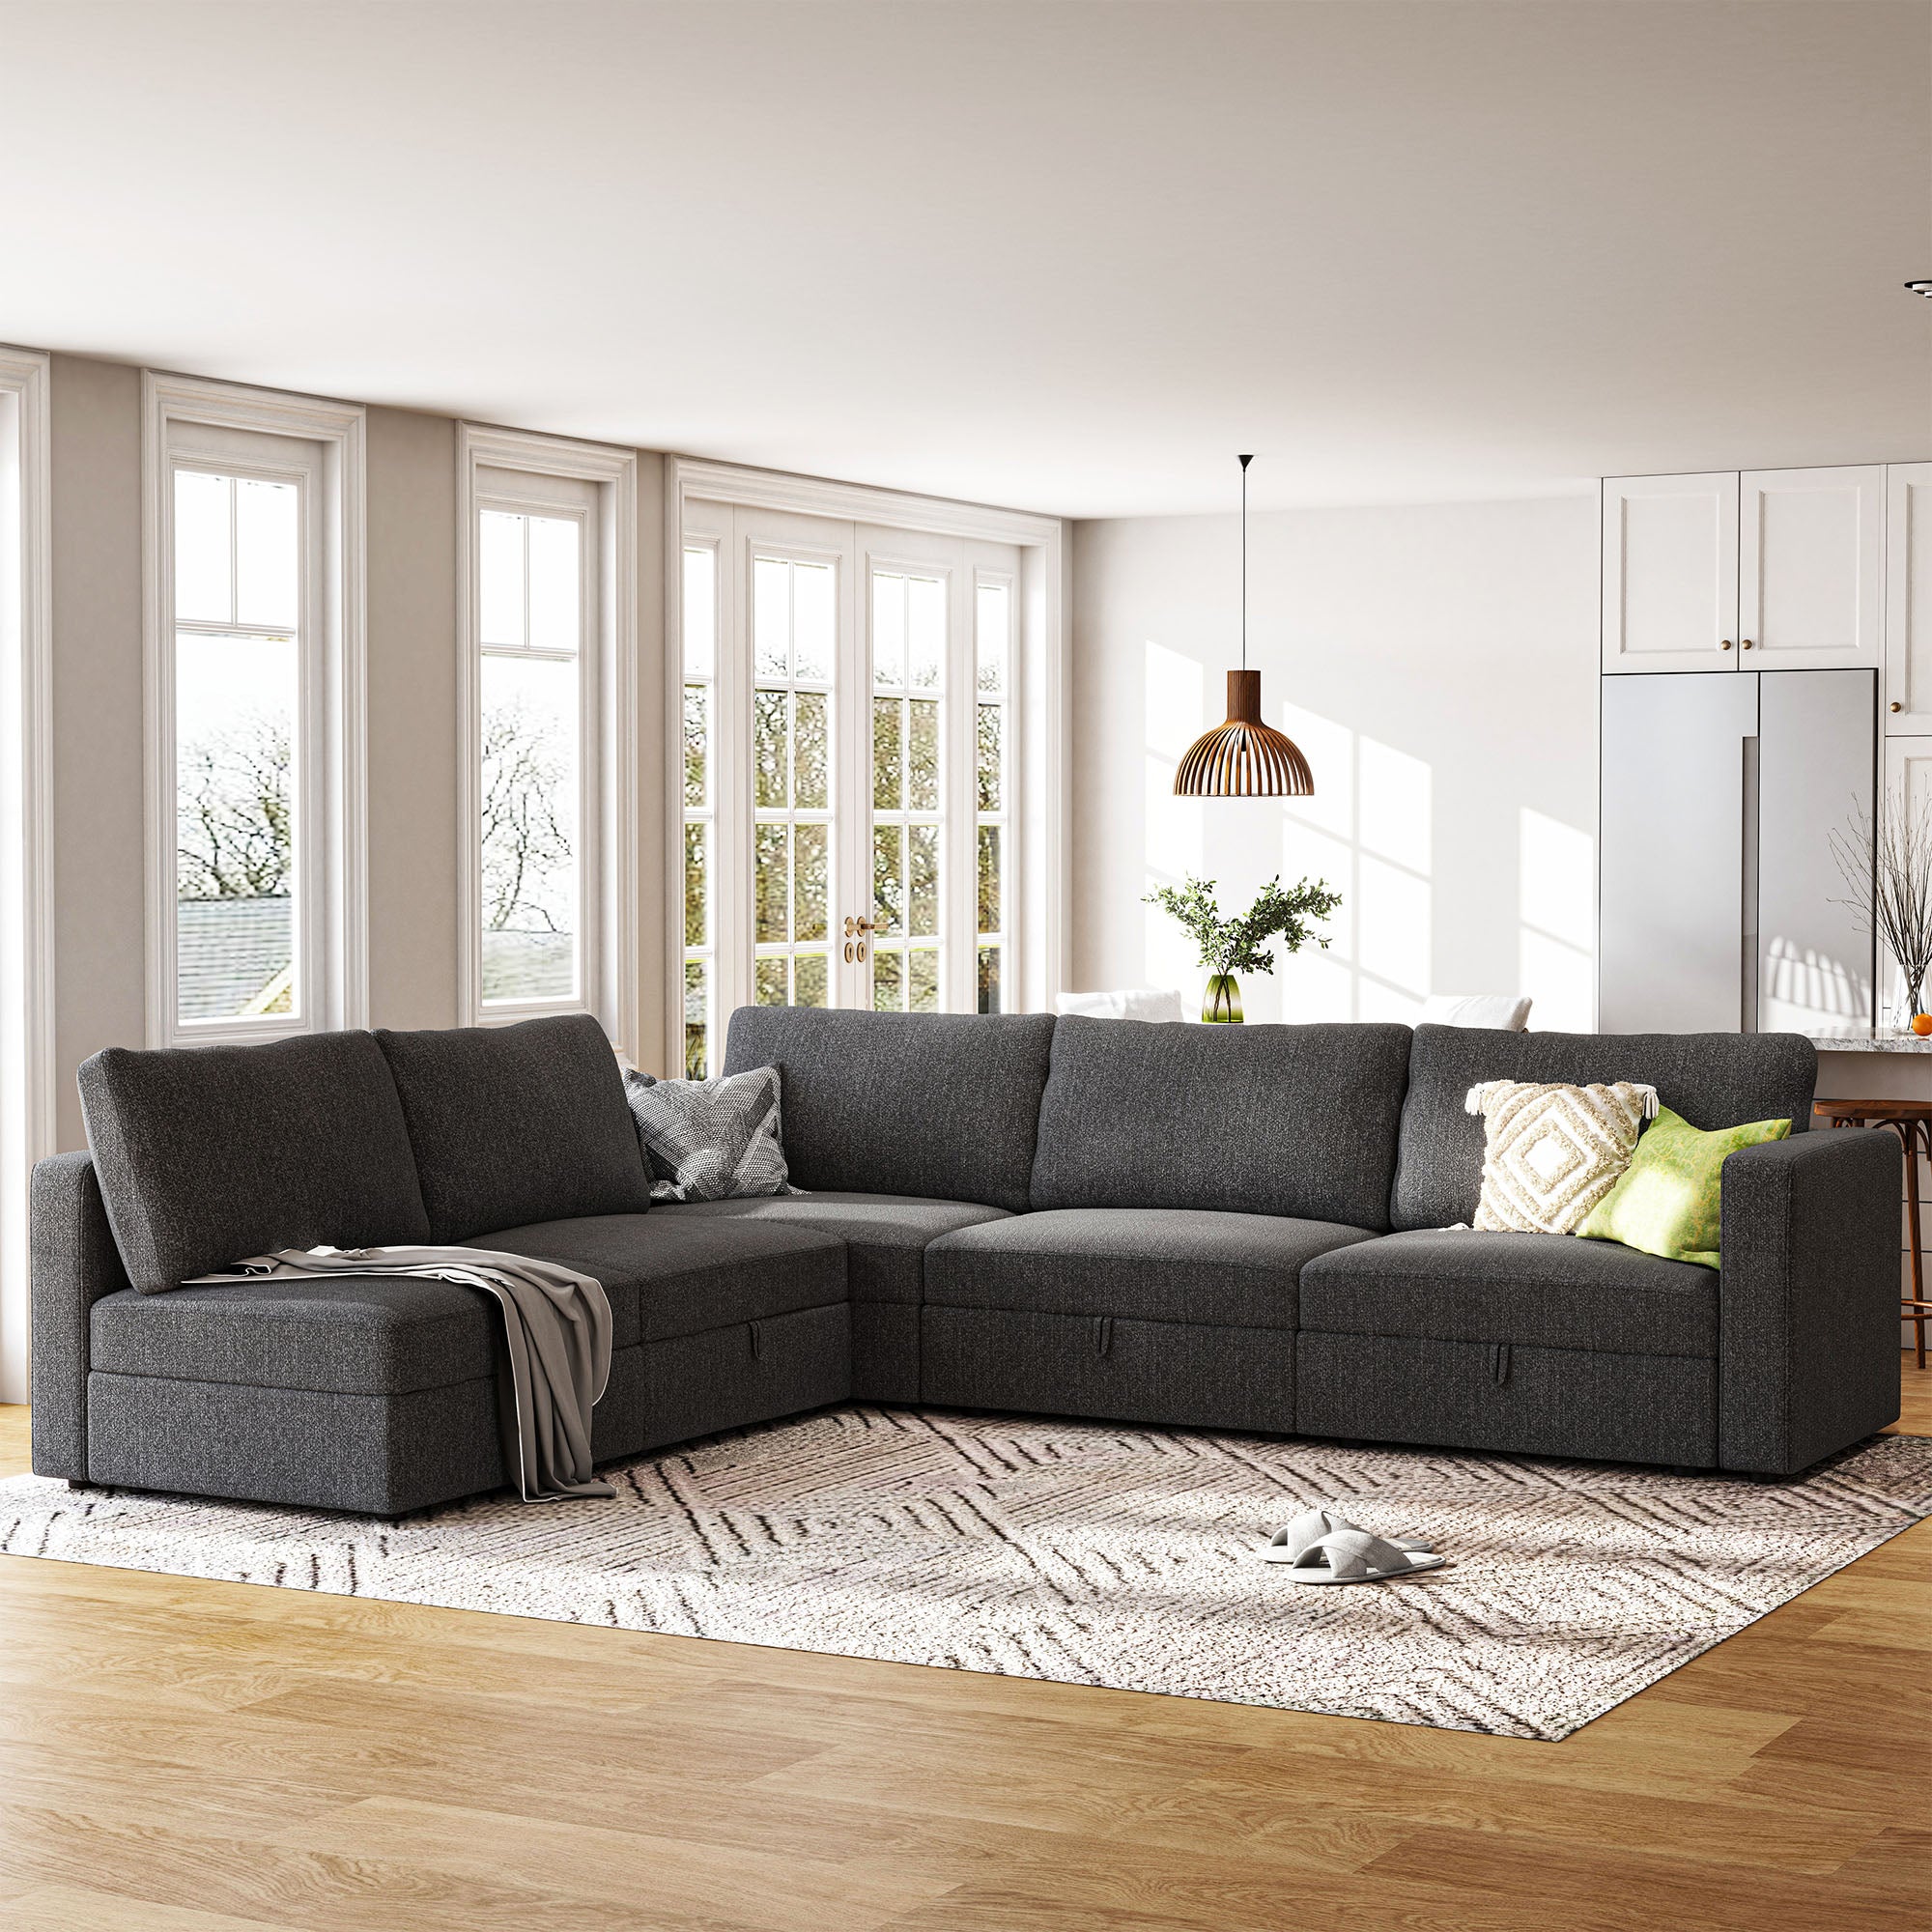 HONBAY Polyester Storage Seat Modular Sectional Sofa in Dark Grey